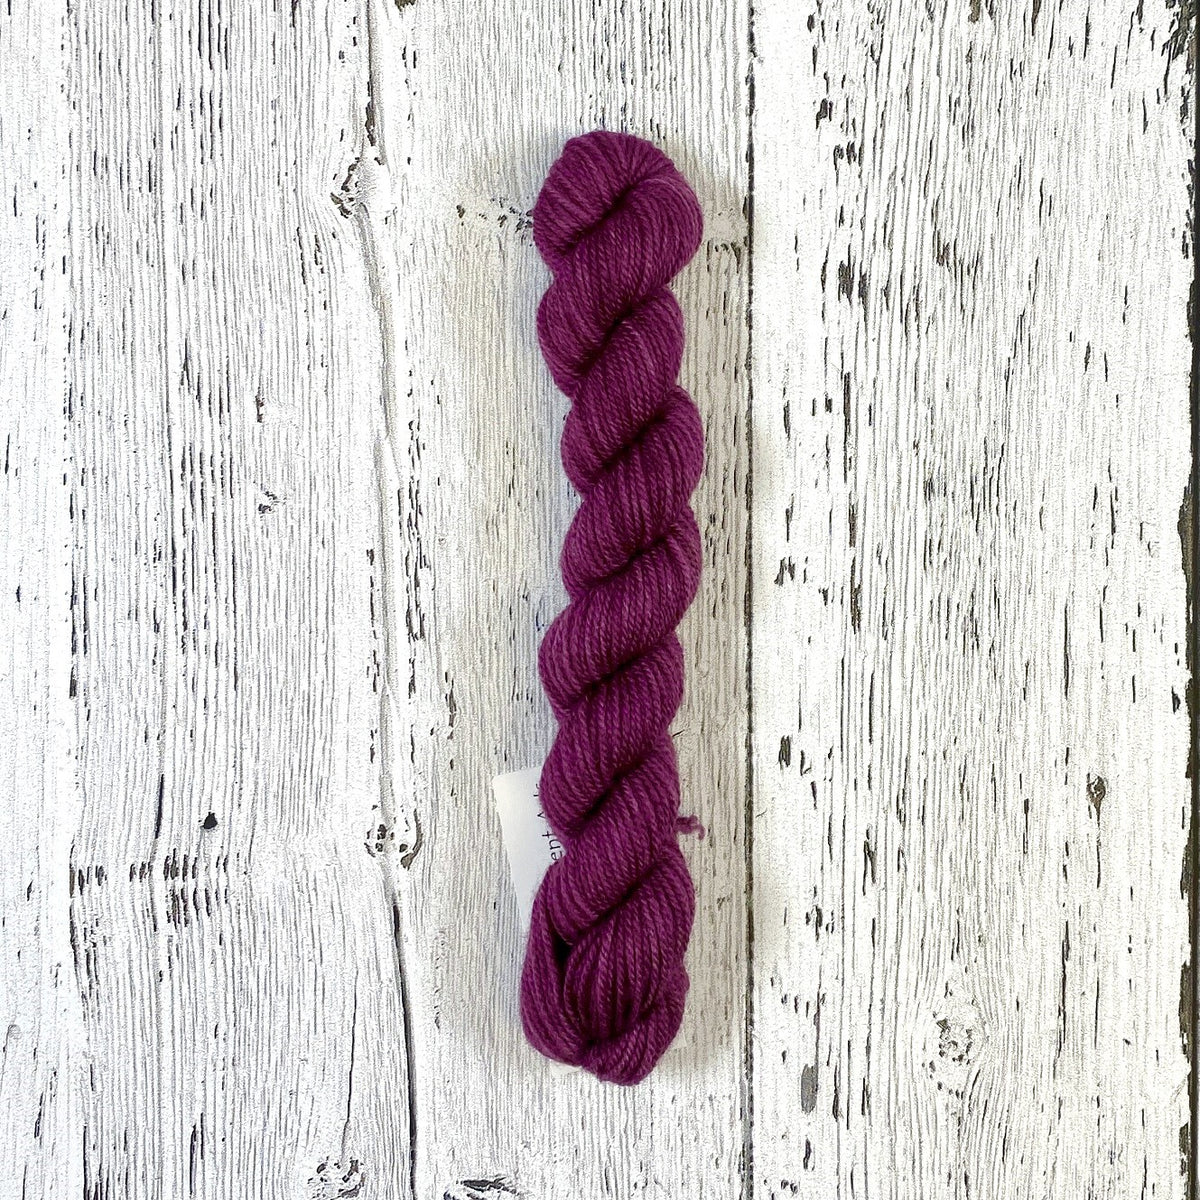 Contented Grapes - Socknado Mini Twister 20 Gram - Dyed Stock